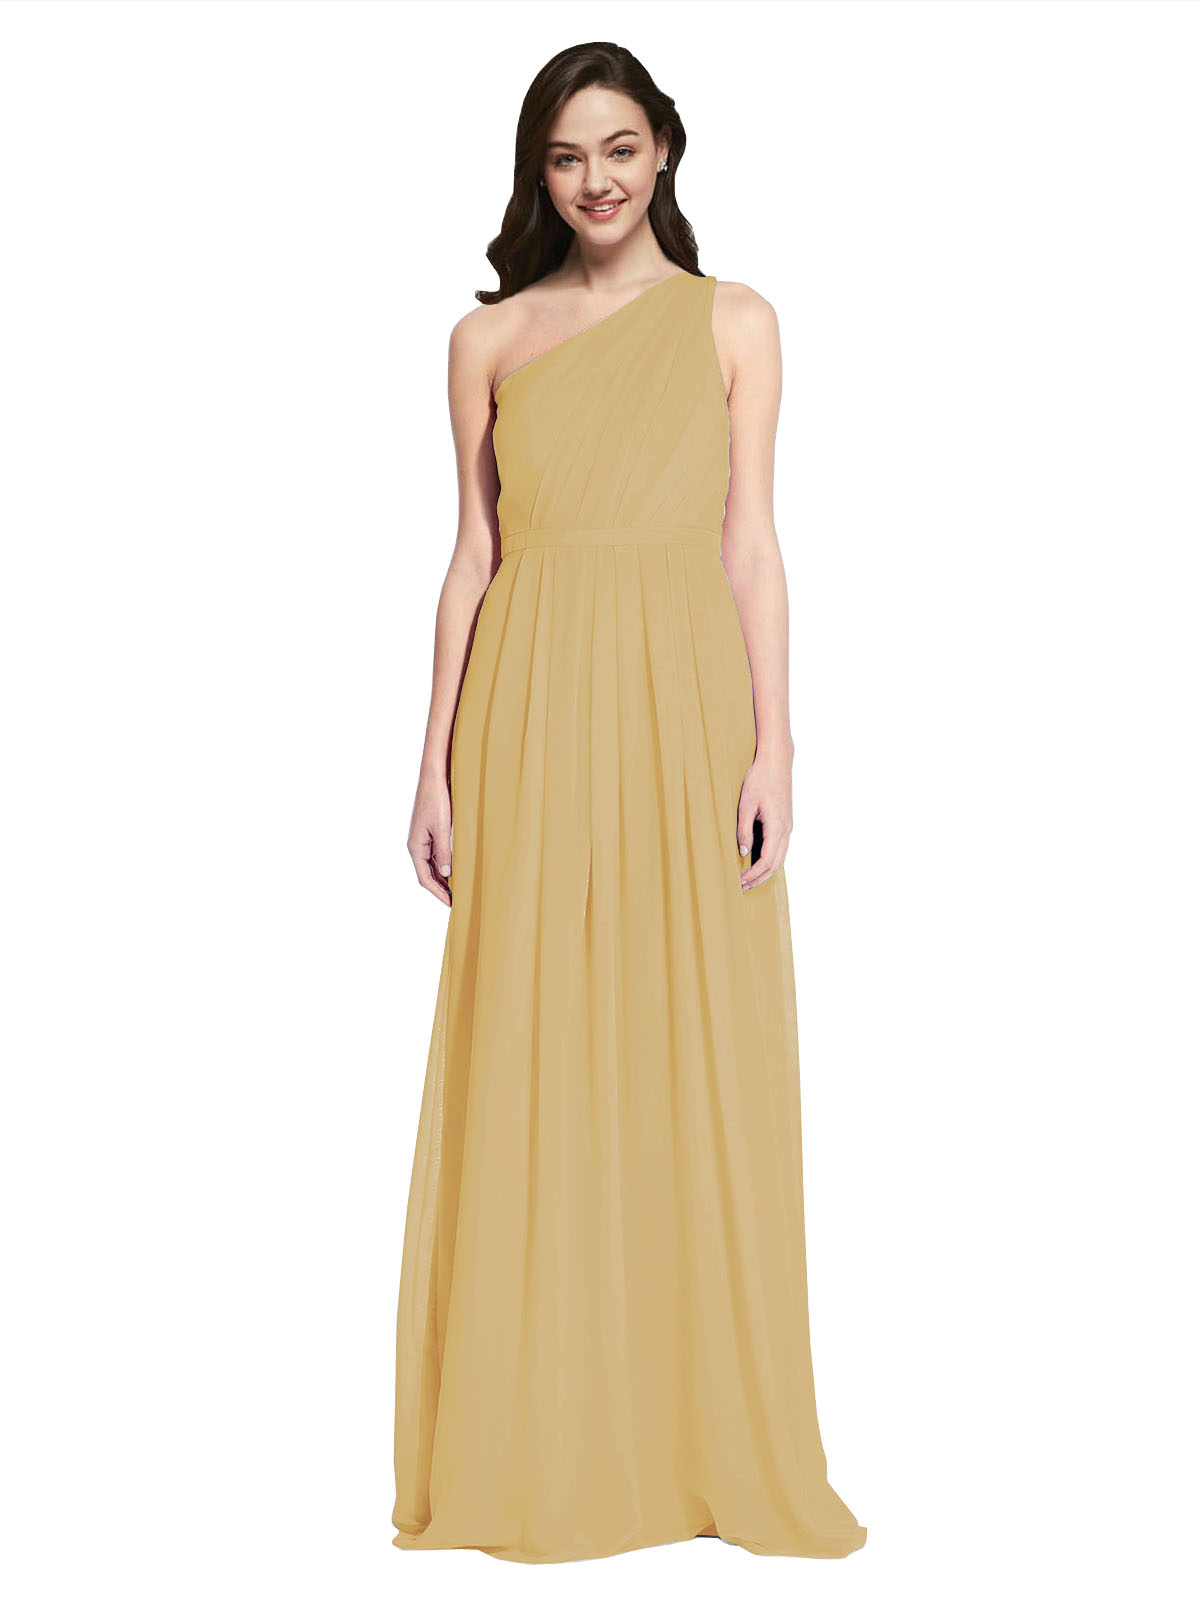 Long A-Line One Shoulder Sleeveless Gold Chiffon Bridesmaid Dress Orlando